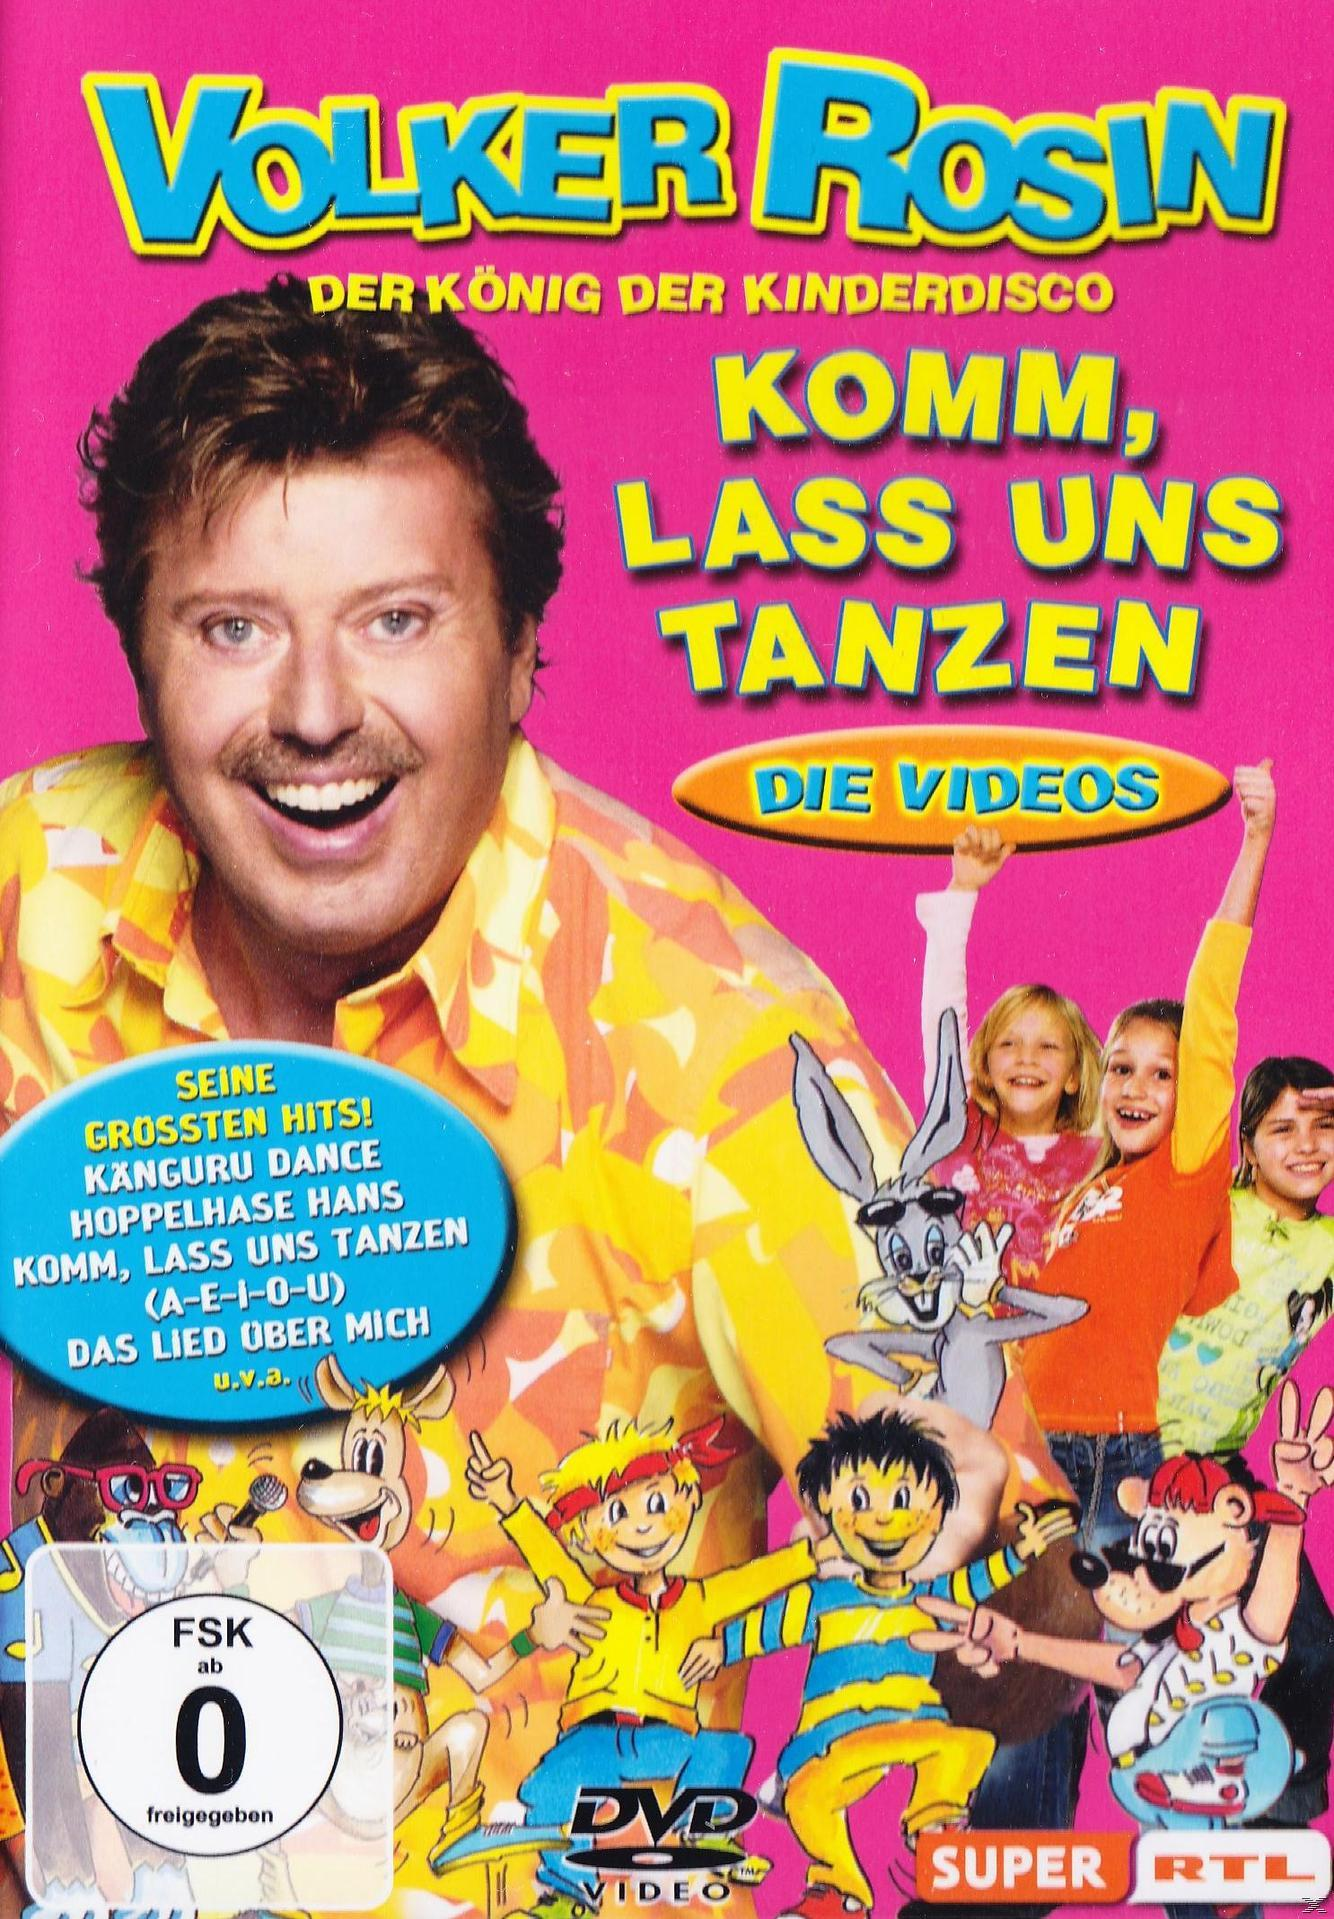 Volker Rosin - Volker Rosin Die Komm, (DVD) - tanzen: - uns Videos lass